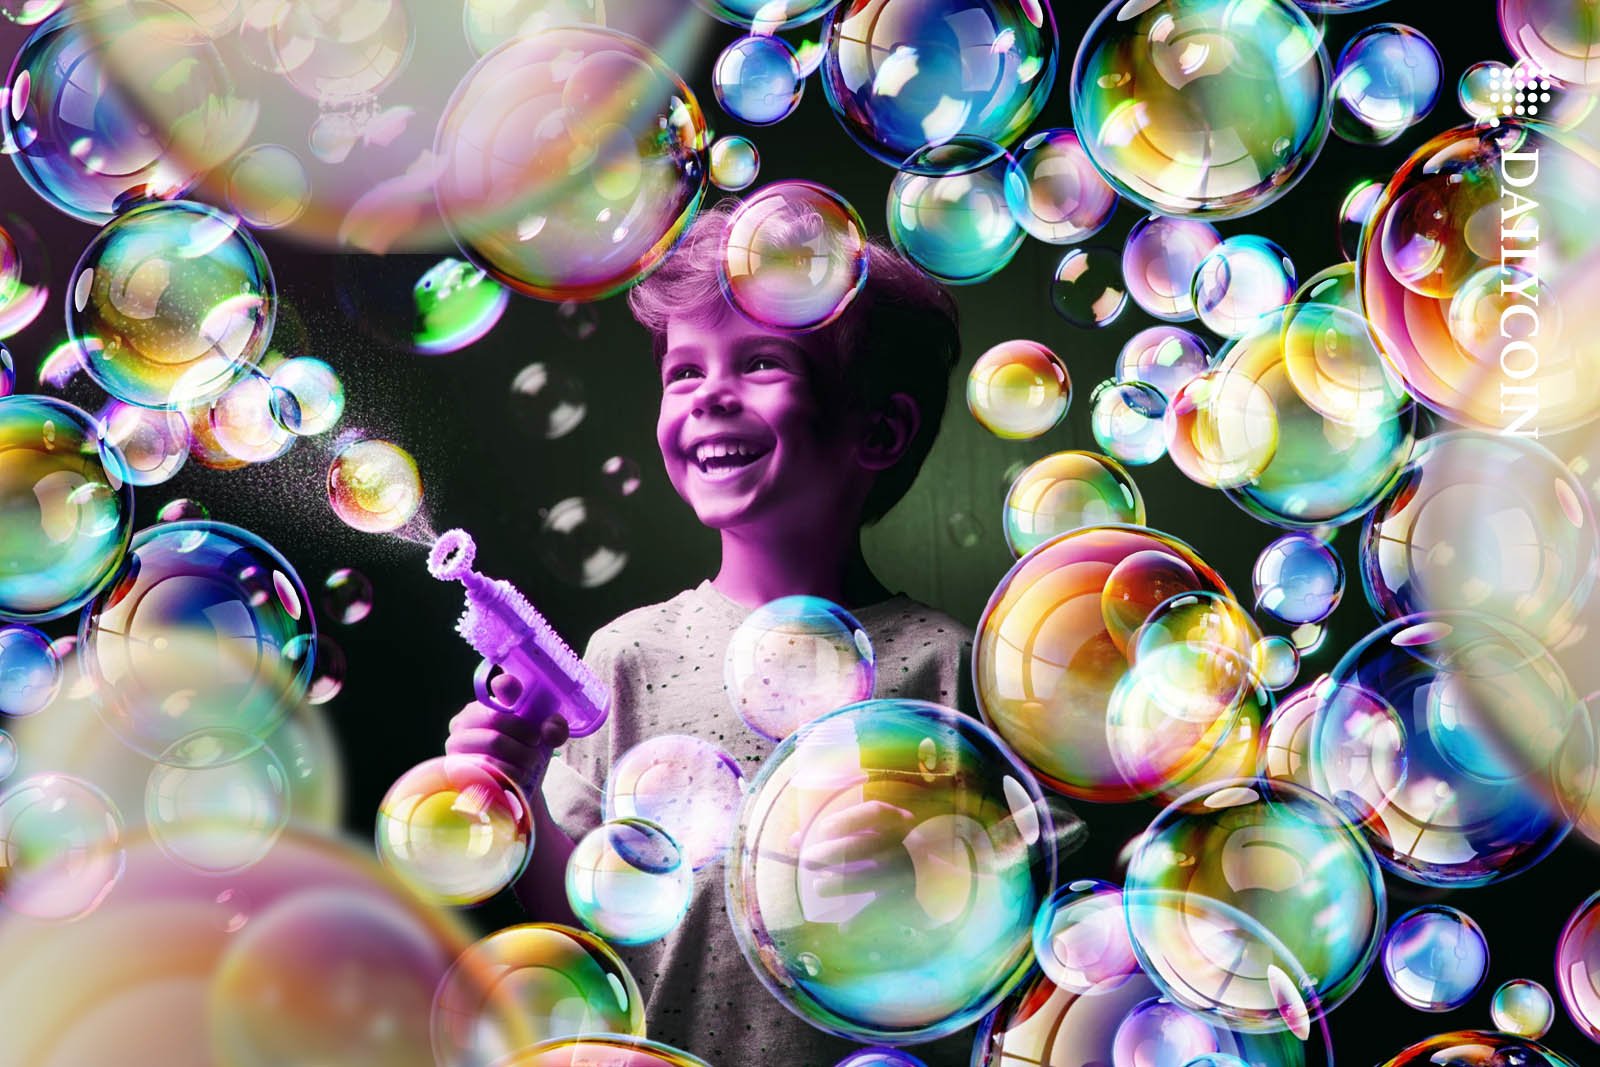 A purple boy creating millions of soap bubbles with a purple bubble gun.